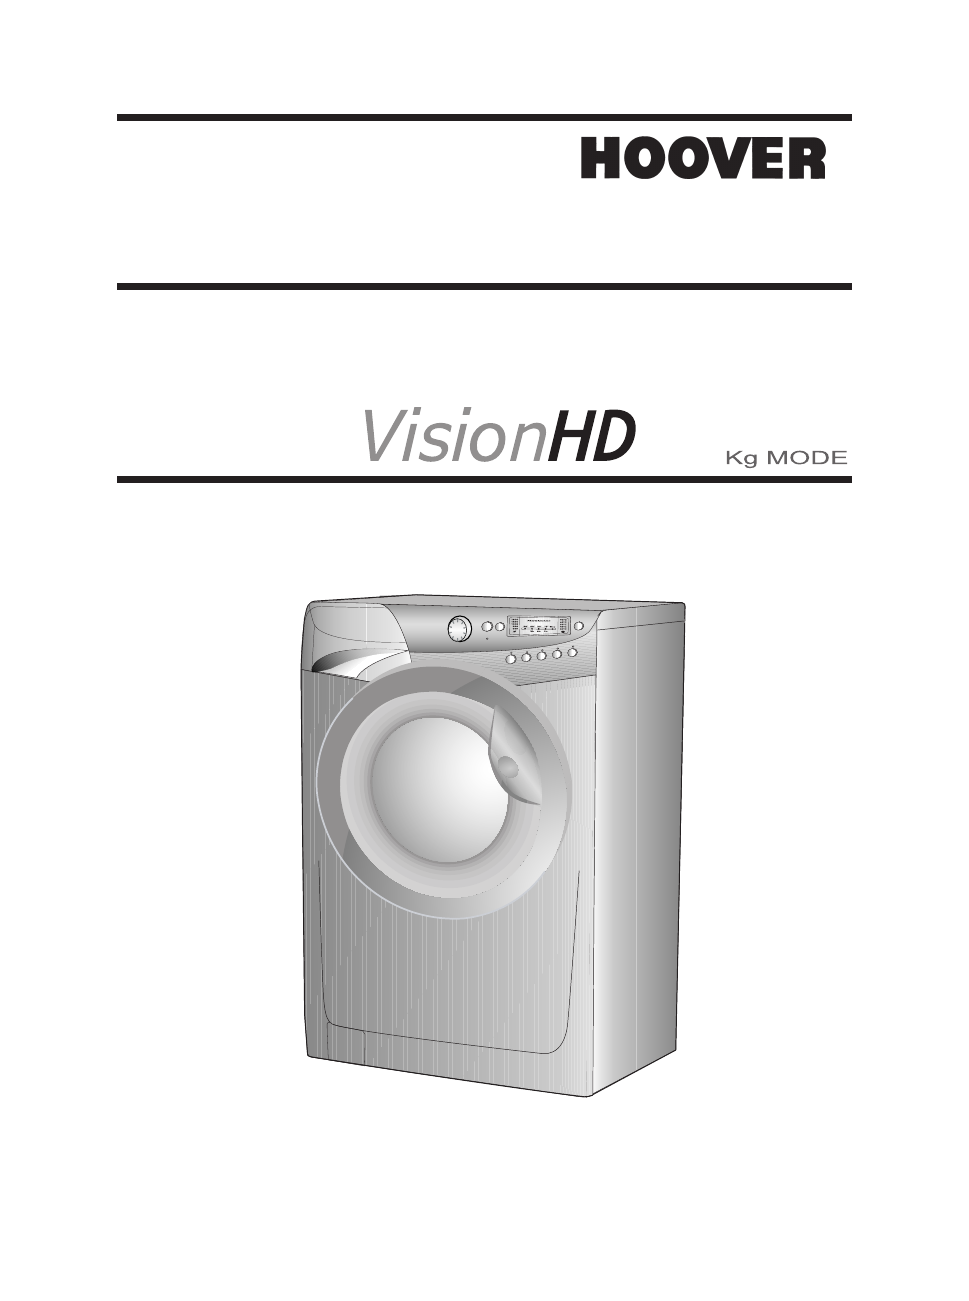 Hoover Washing Machine User Manual Free Download - odheavy